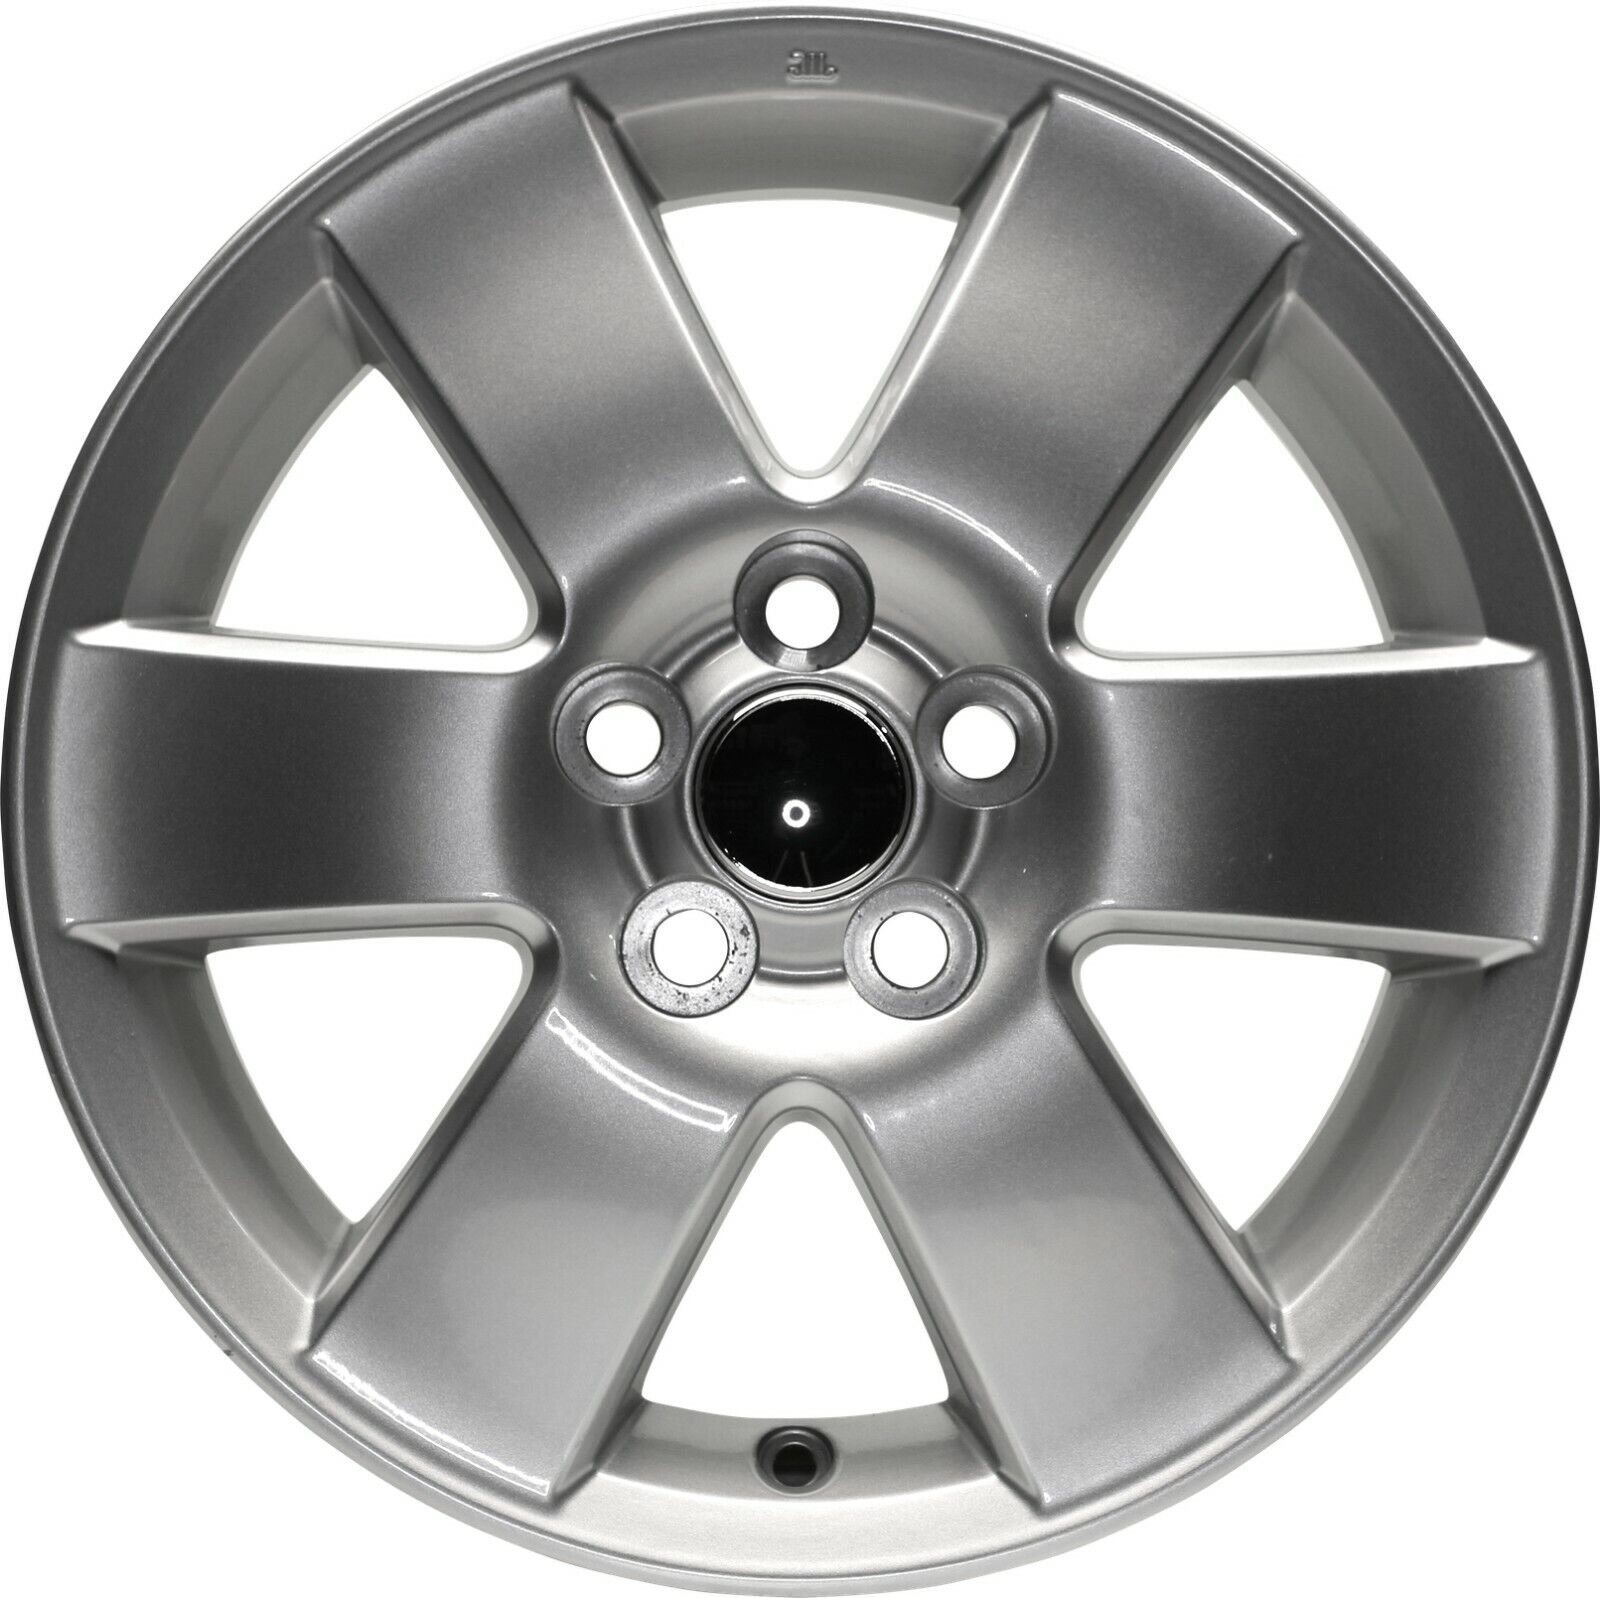 Aluminum Alloy Wheel Rim 15 Inch Fits 03-08 Toyota Corolla Matrix 6 Spokes   